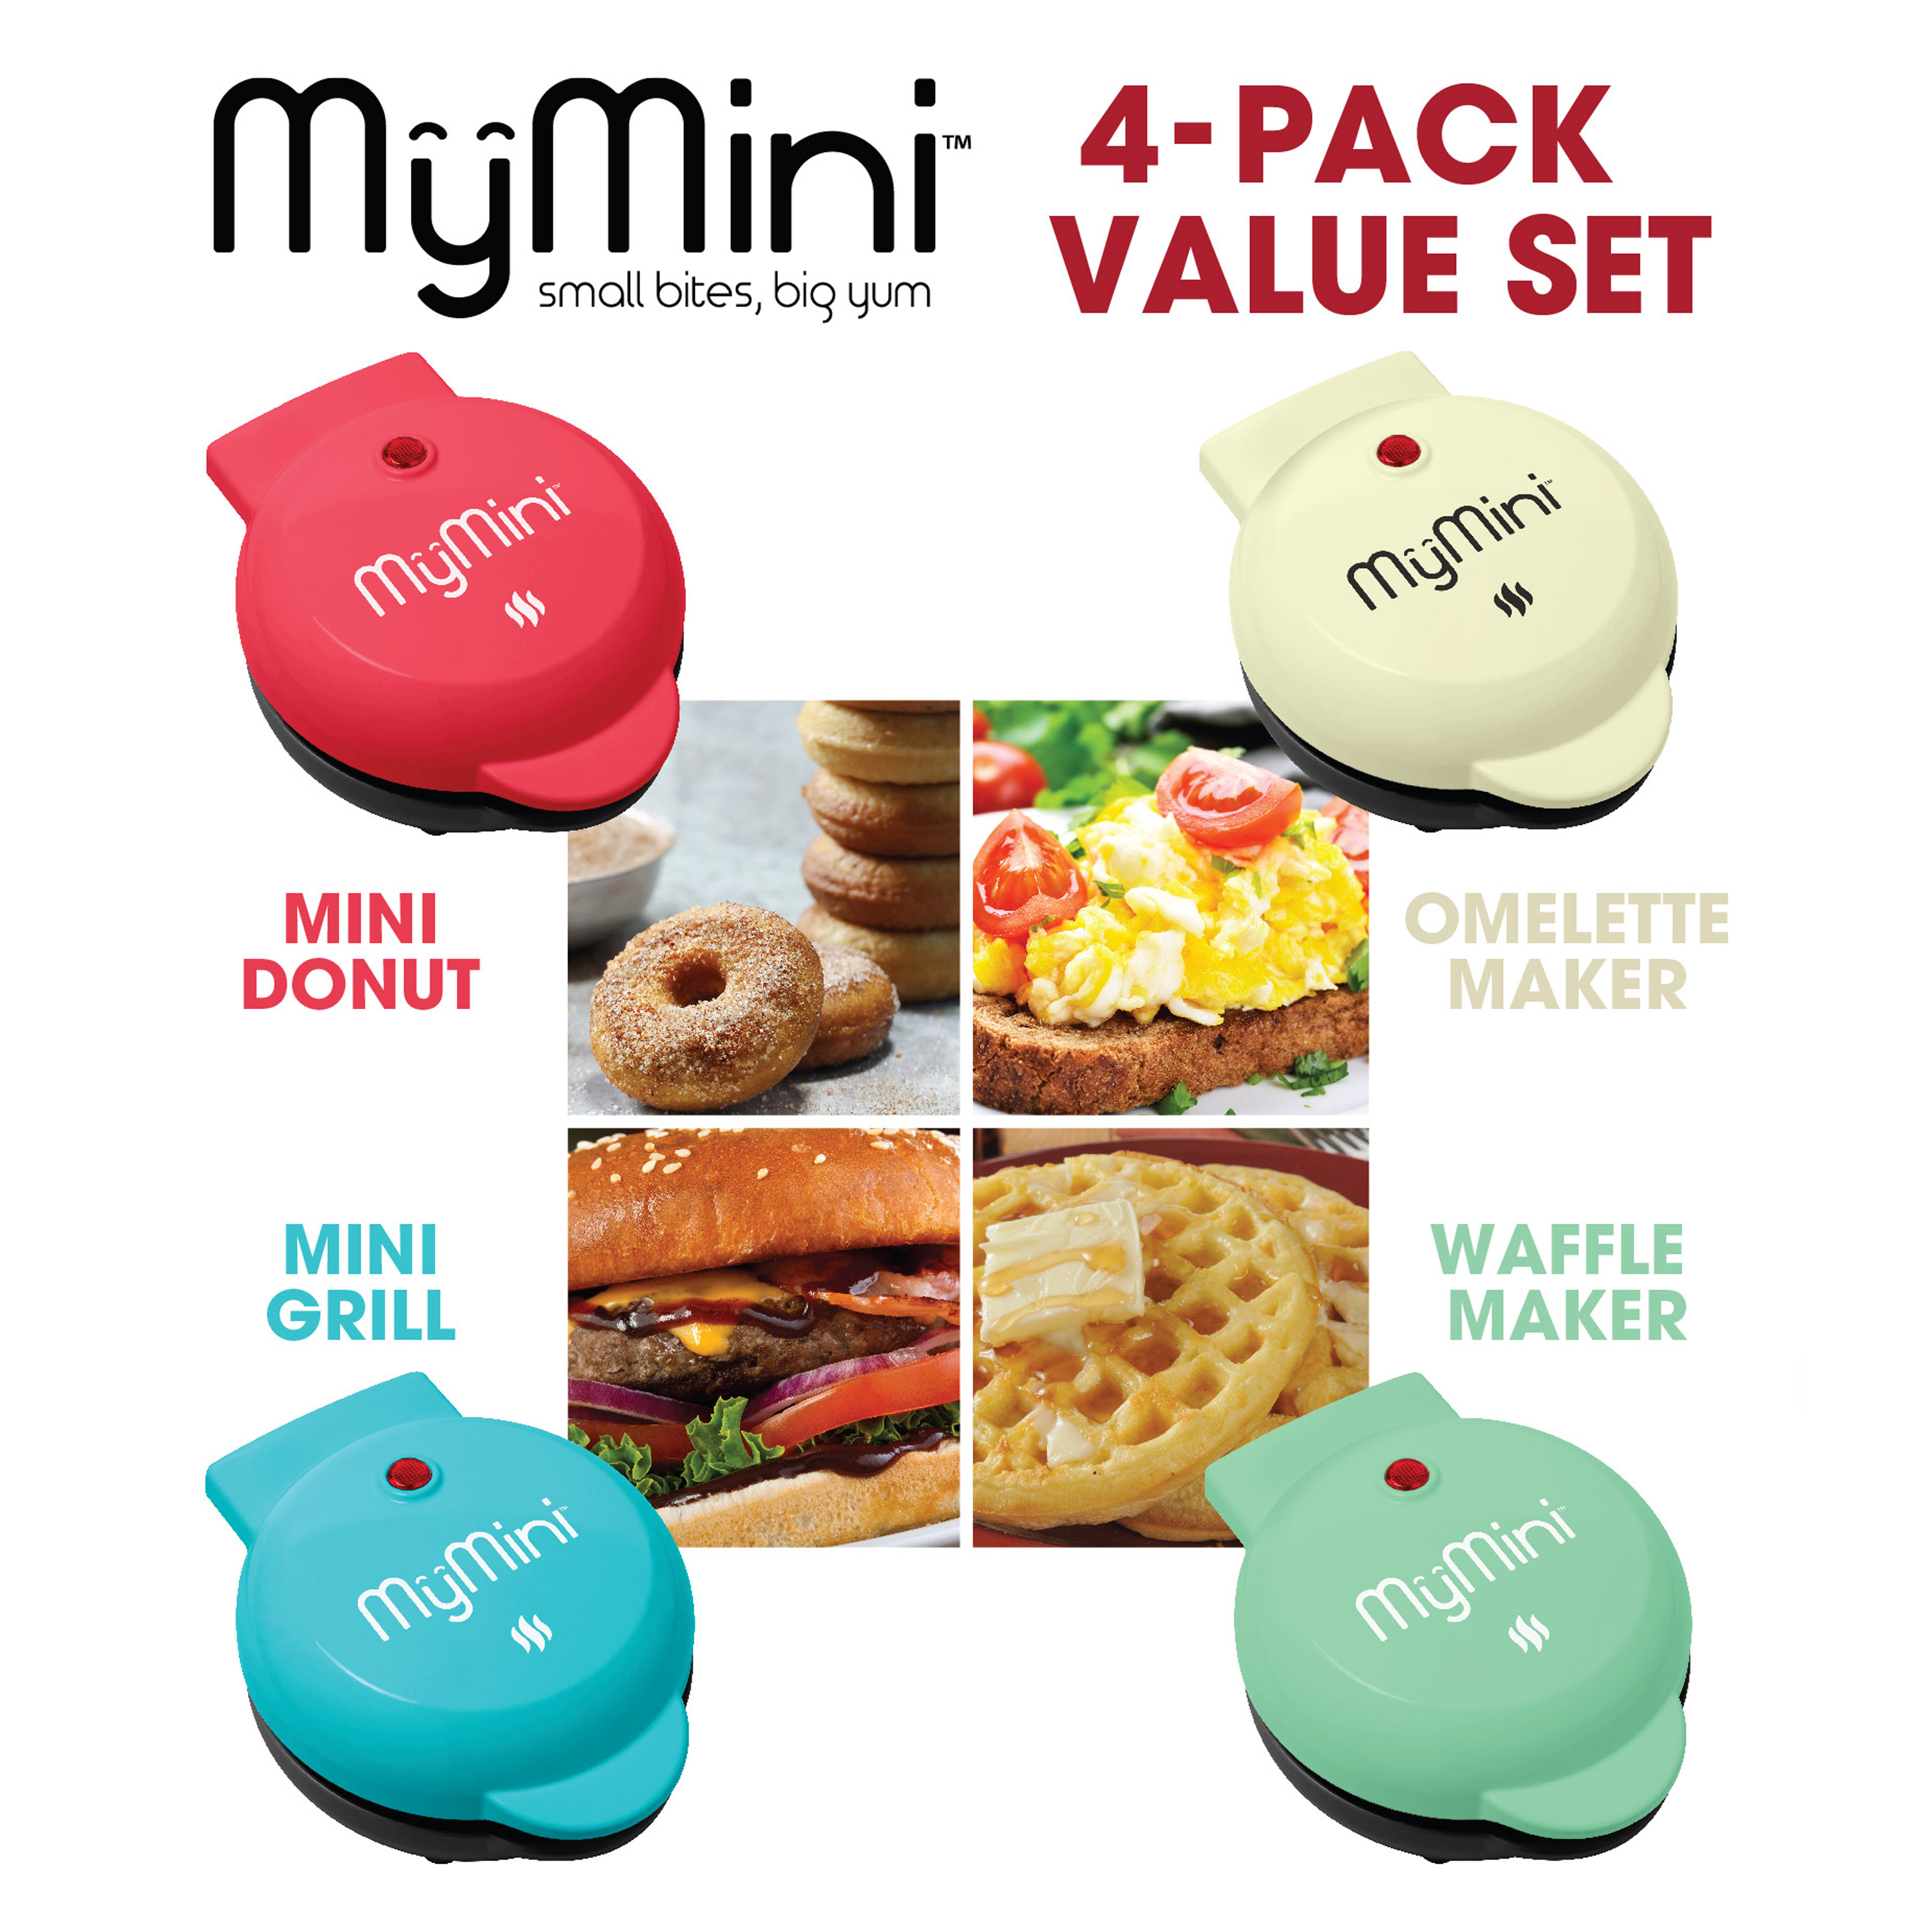 MyMini Deluxe Value Box Set; includes Waffle Maker, Griddle, Donut Maker, and Omelette Maker 4 pack - image 1 of 10